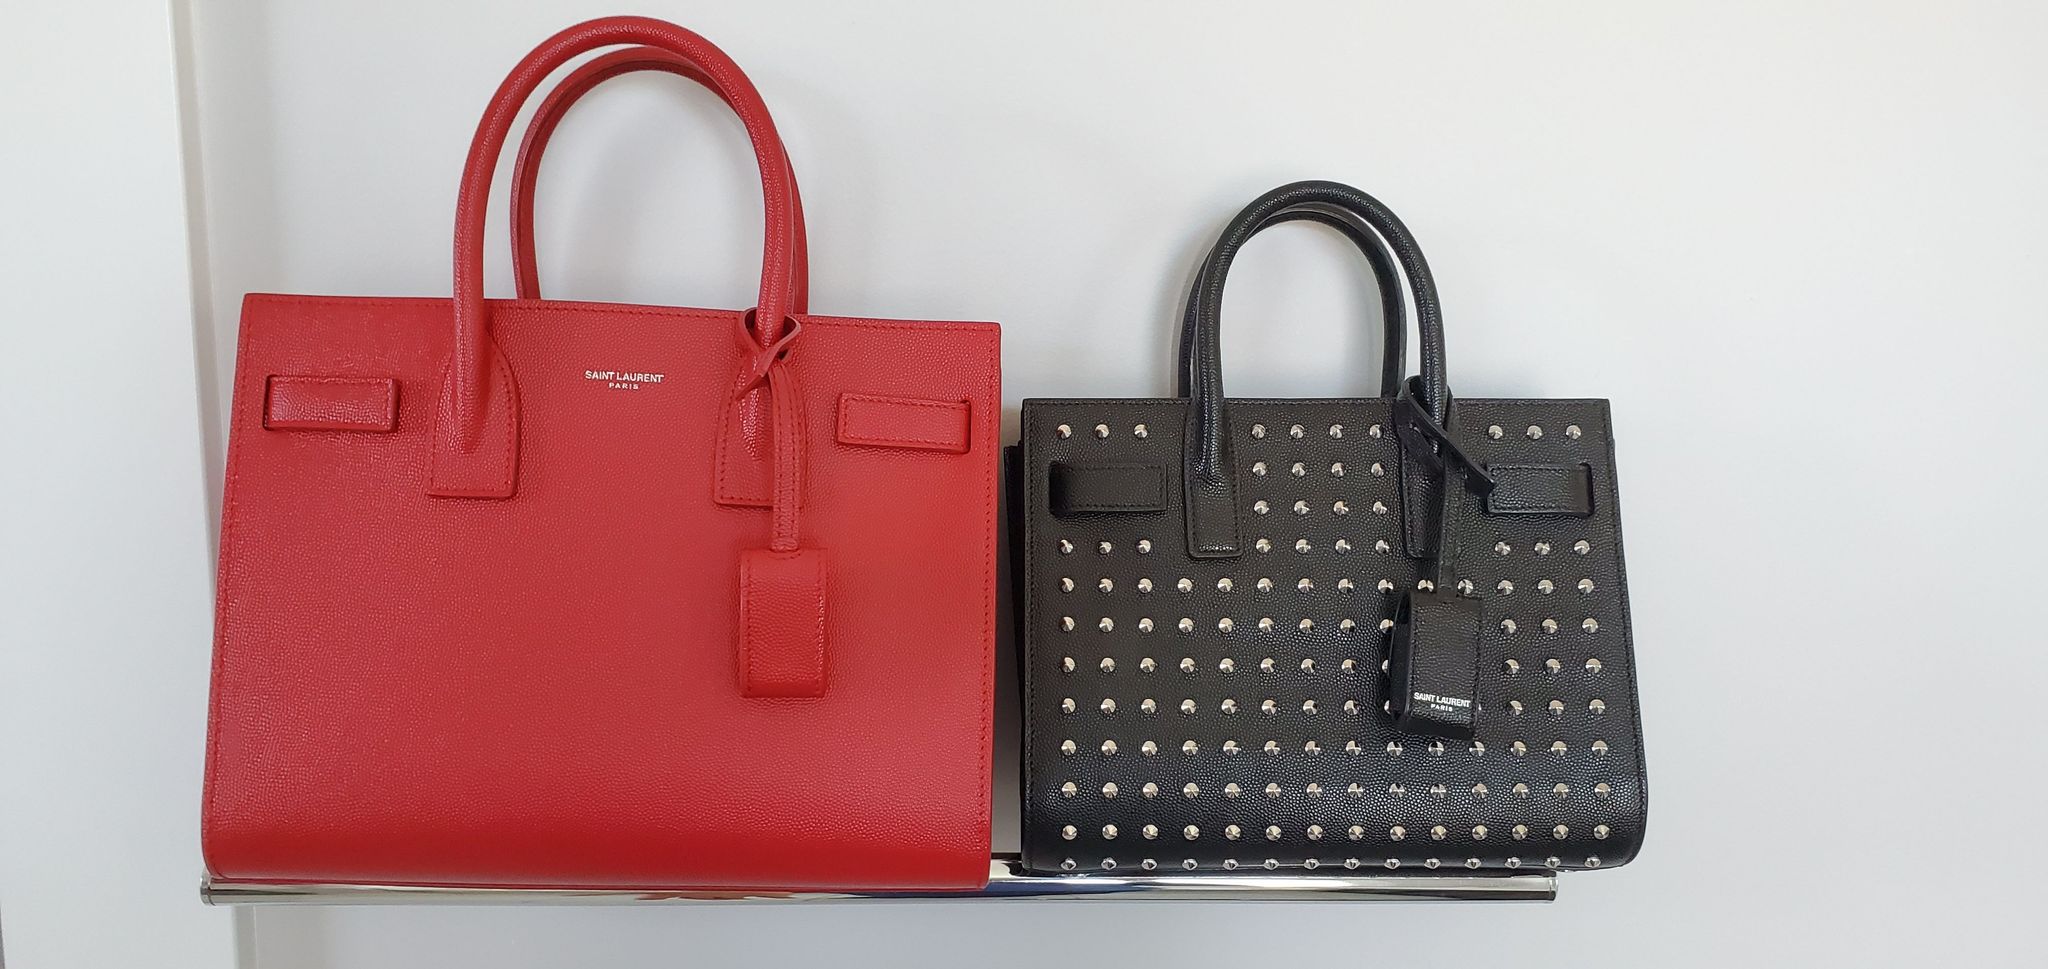 For Spring 2021, Chloé Spotlights Its Newest Bags - PurseBlog